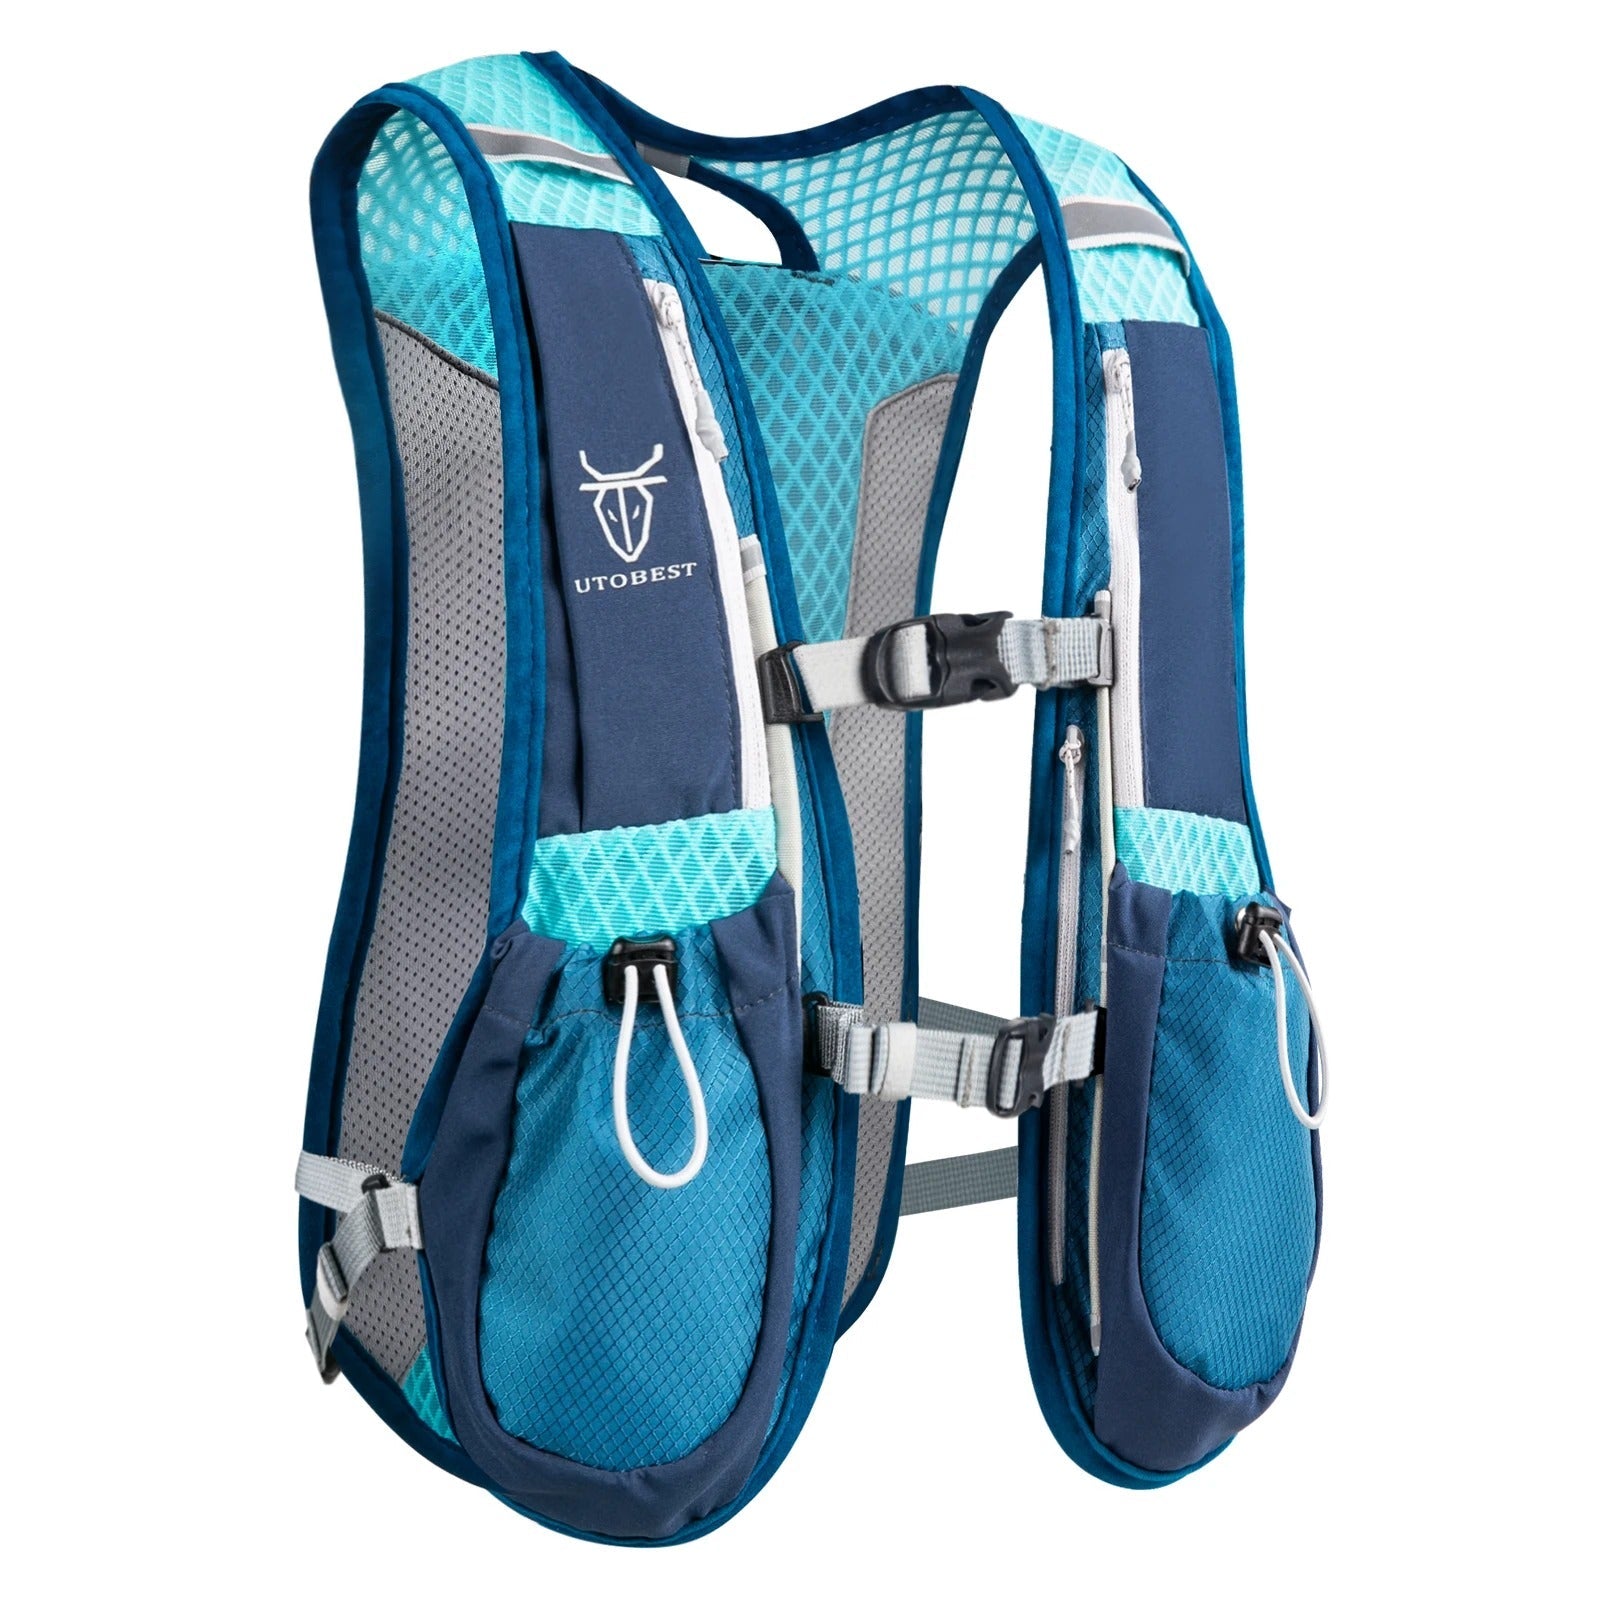 Lightweight Backpack for Running - Blue